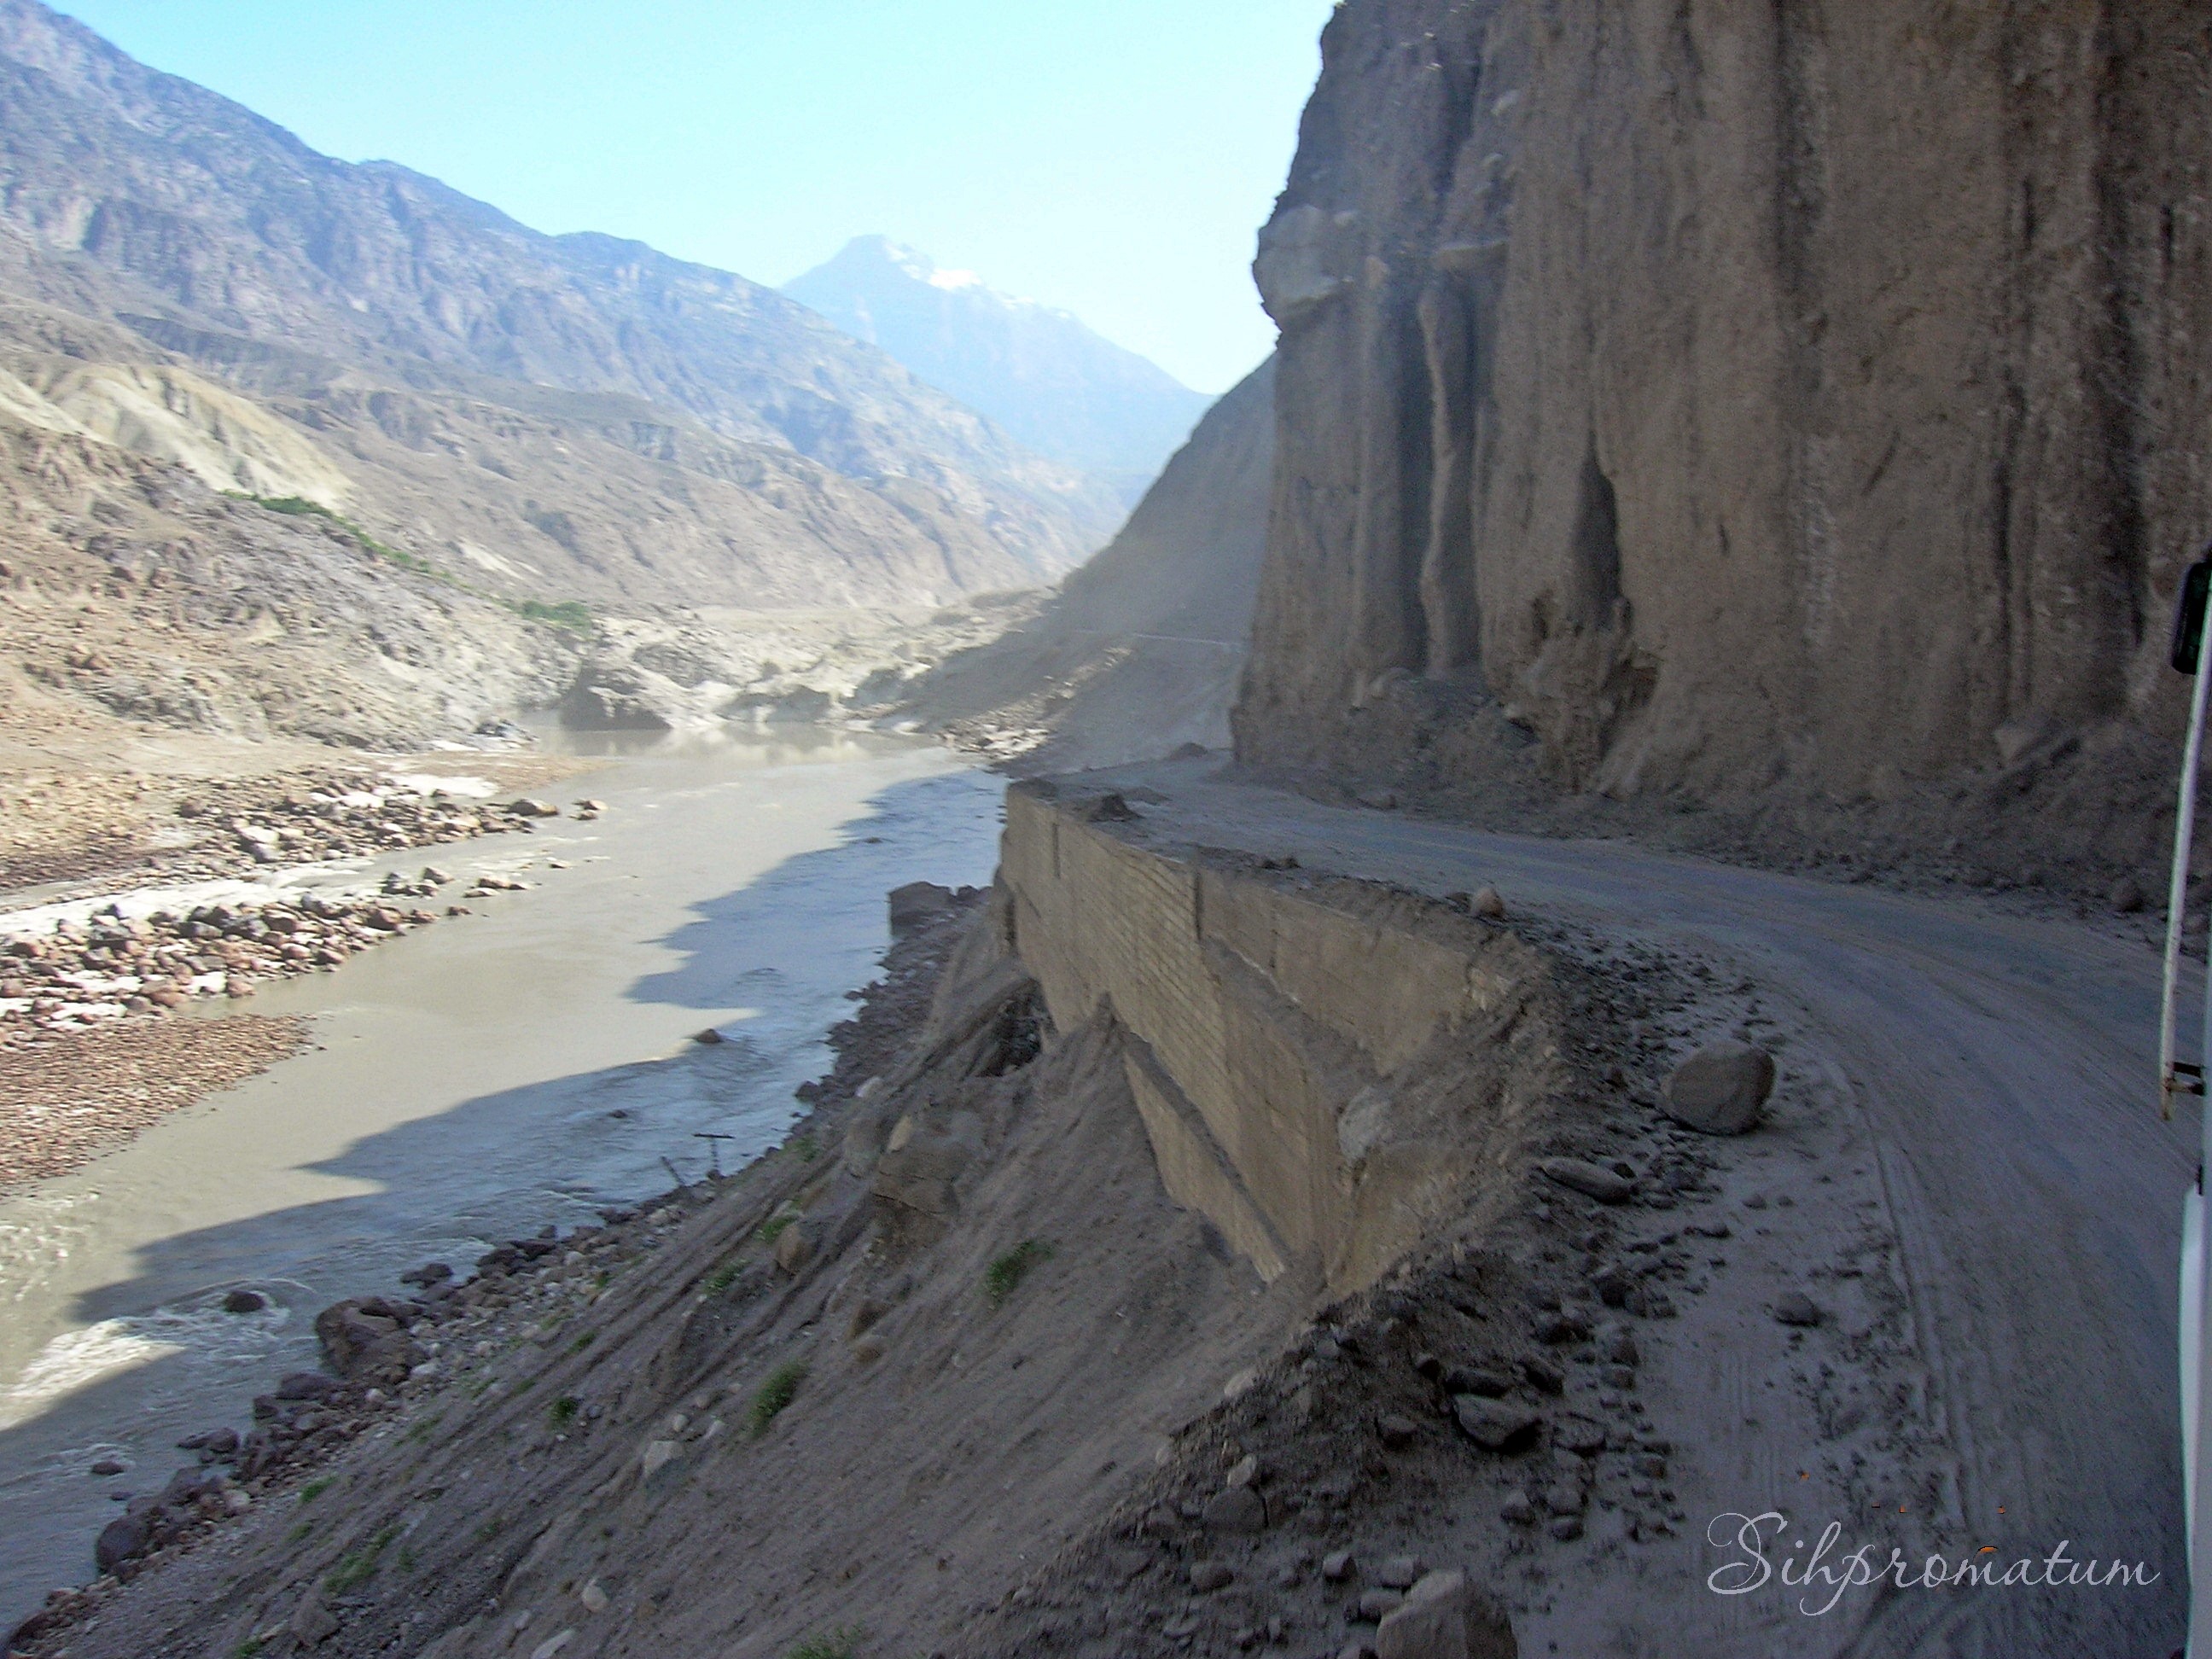 Twisting-roads-through-a-hot-Pakistan